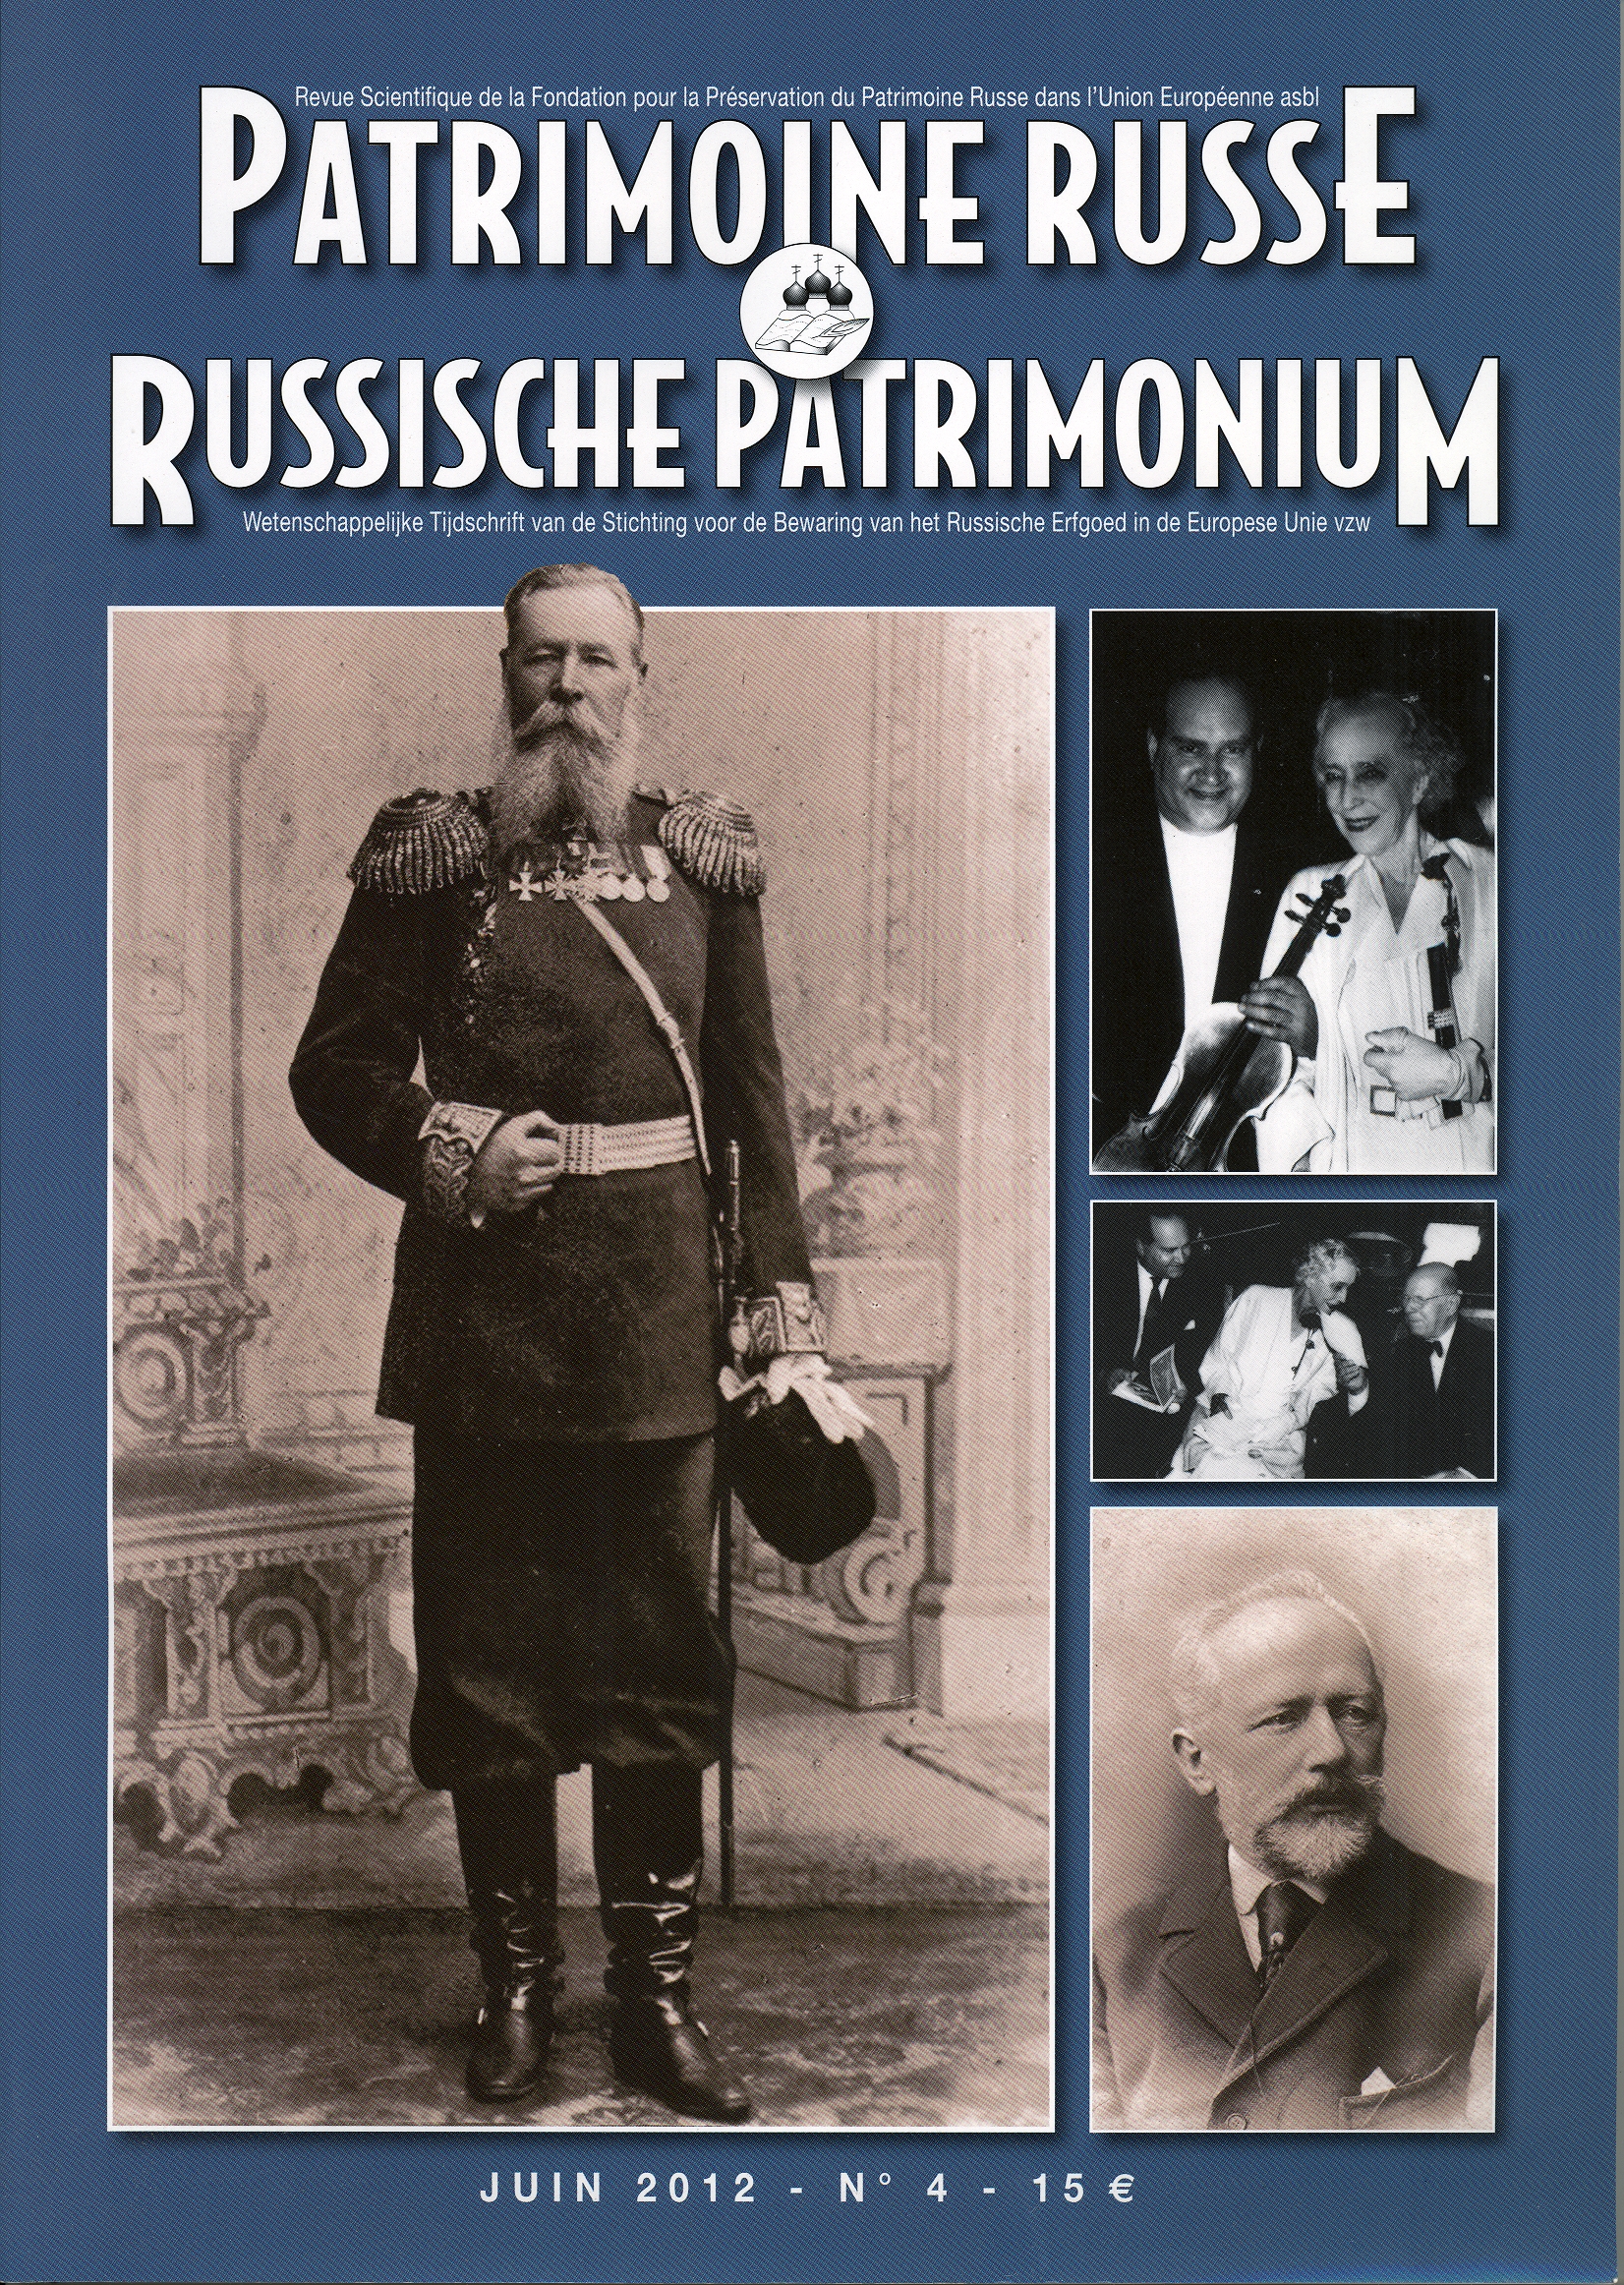 FPPR Revue scientifique. Patrimoine russe. Russische patrimonium. Juin 2012 - n°4 - 15 €. 2012-06-01